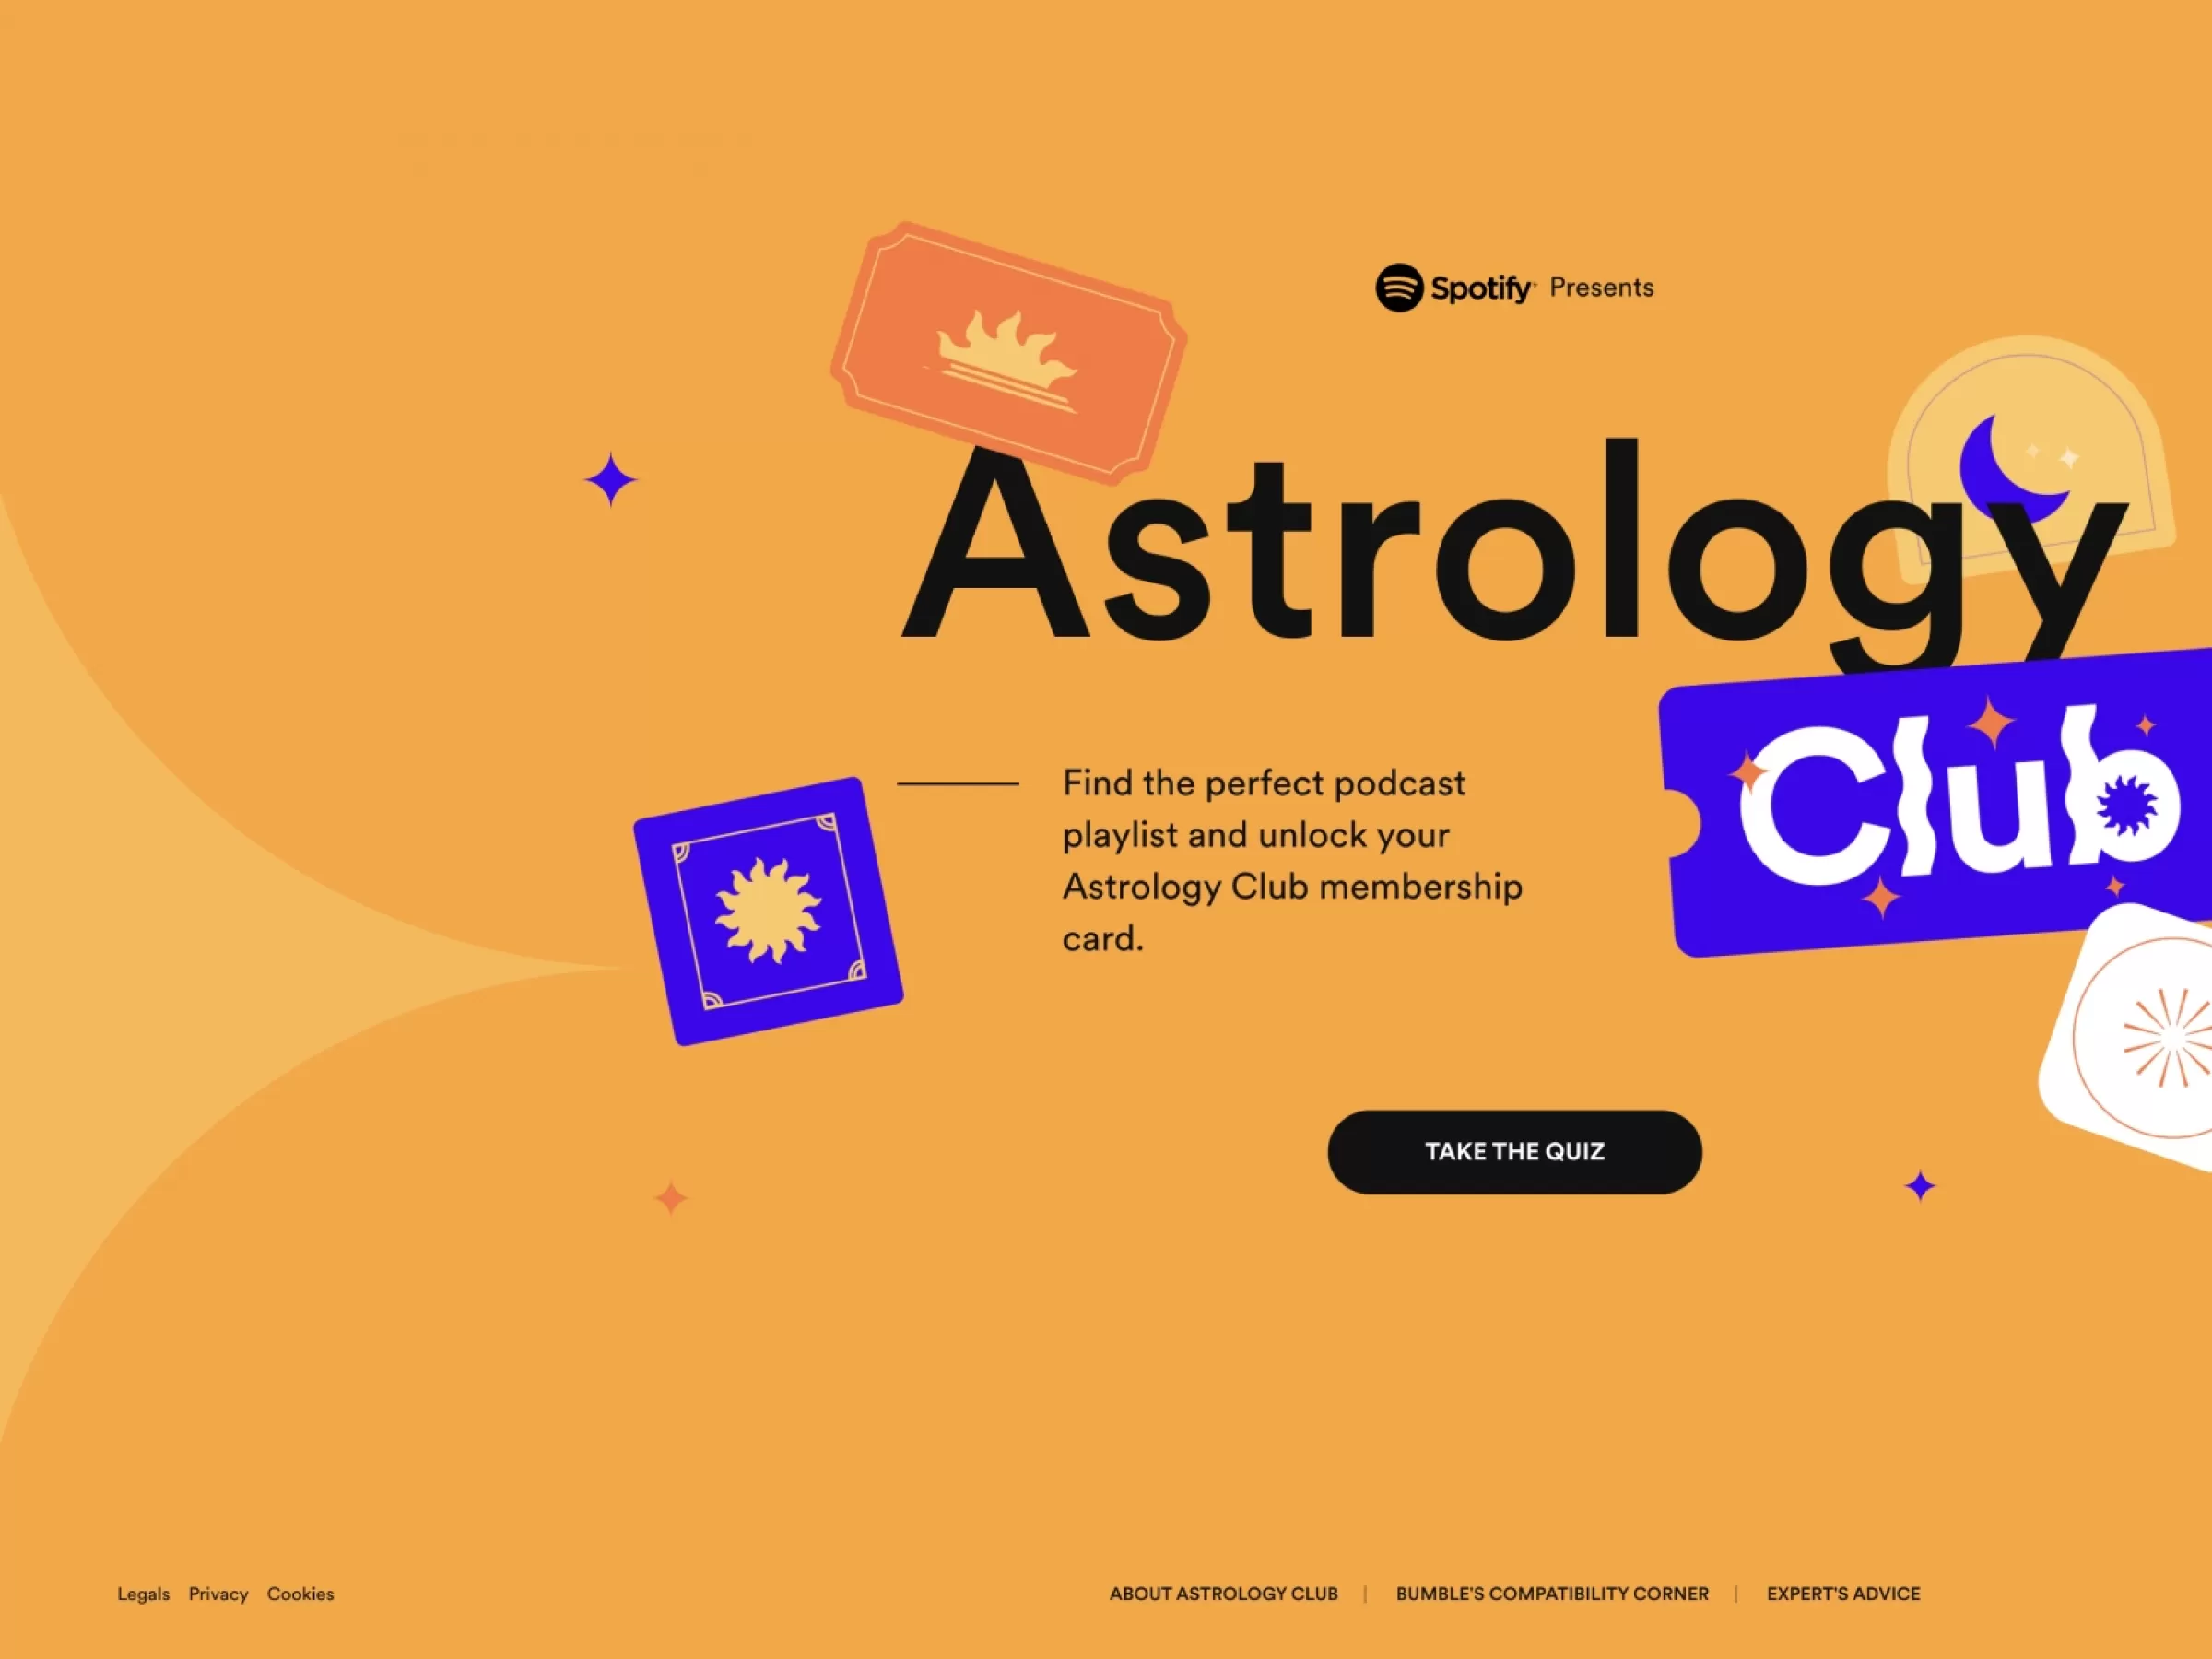 Astrology Club by Spotify Thumb